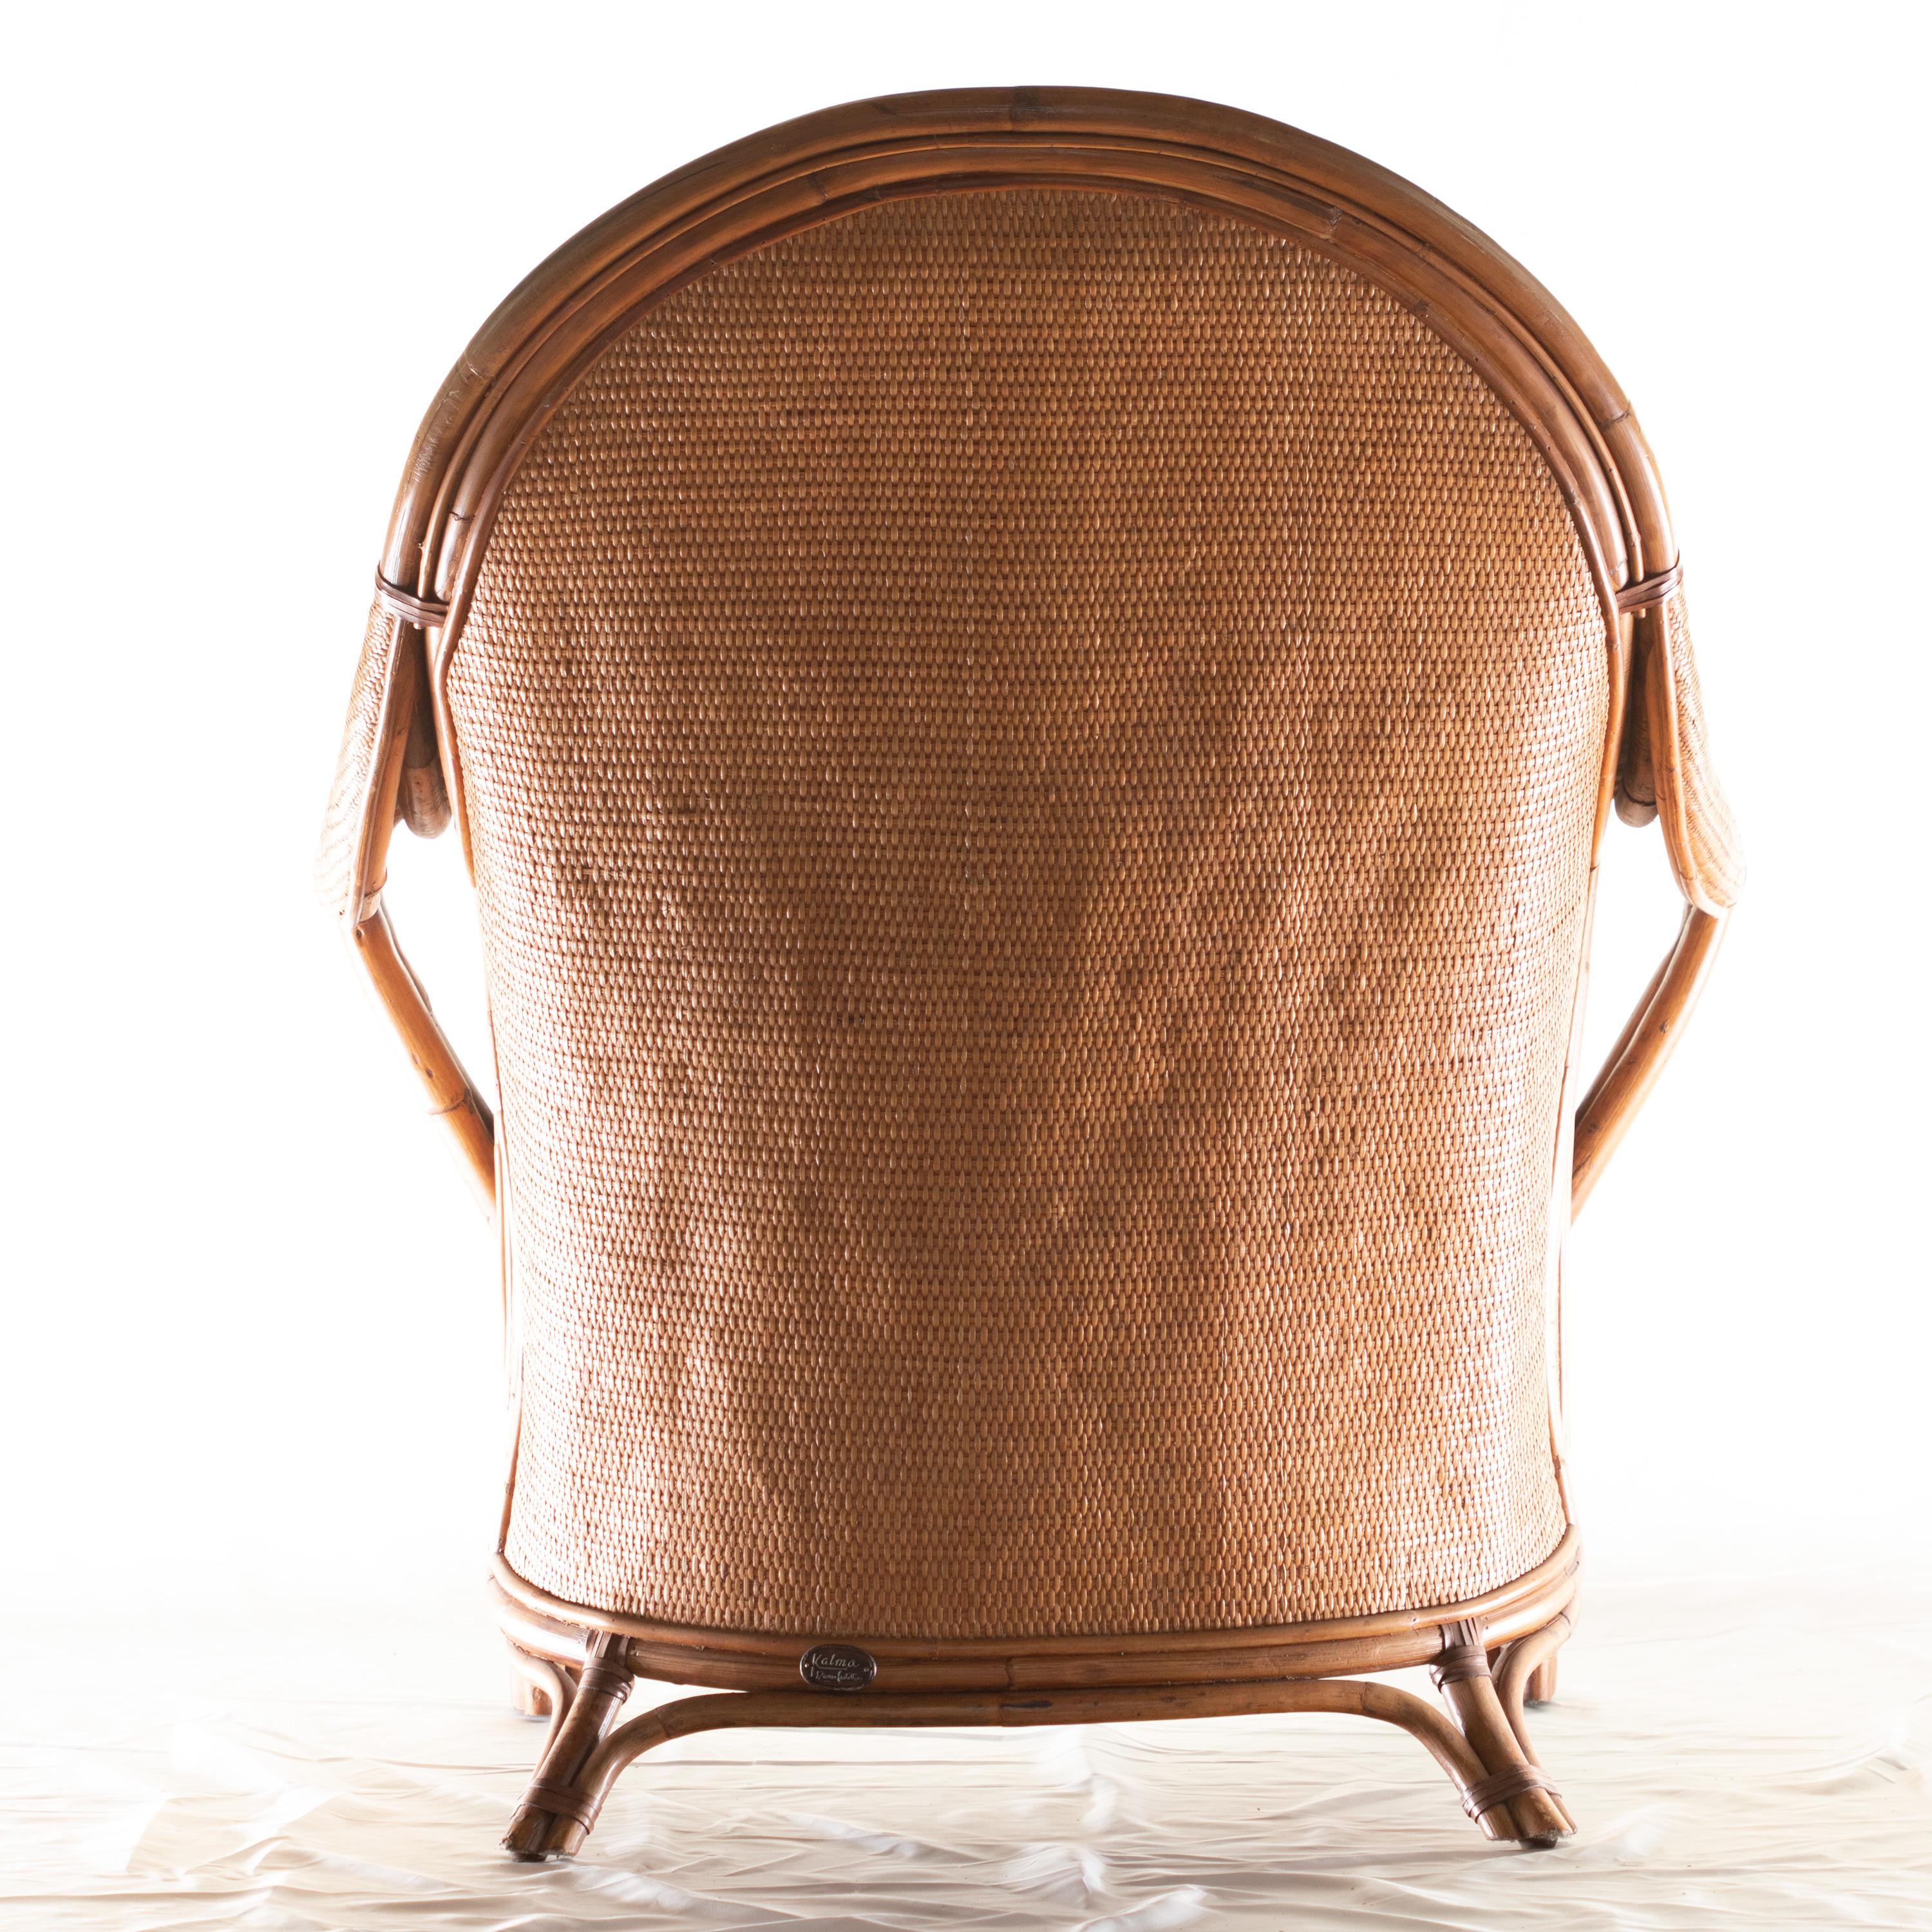 Chinese Export Armchair Bamboo Rattan Wood Handmade Ramon Castellano Leather Kalma Furniture For Sale